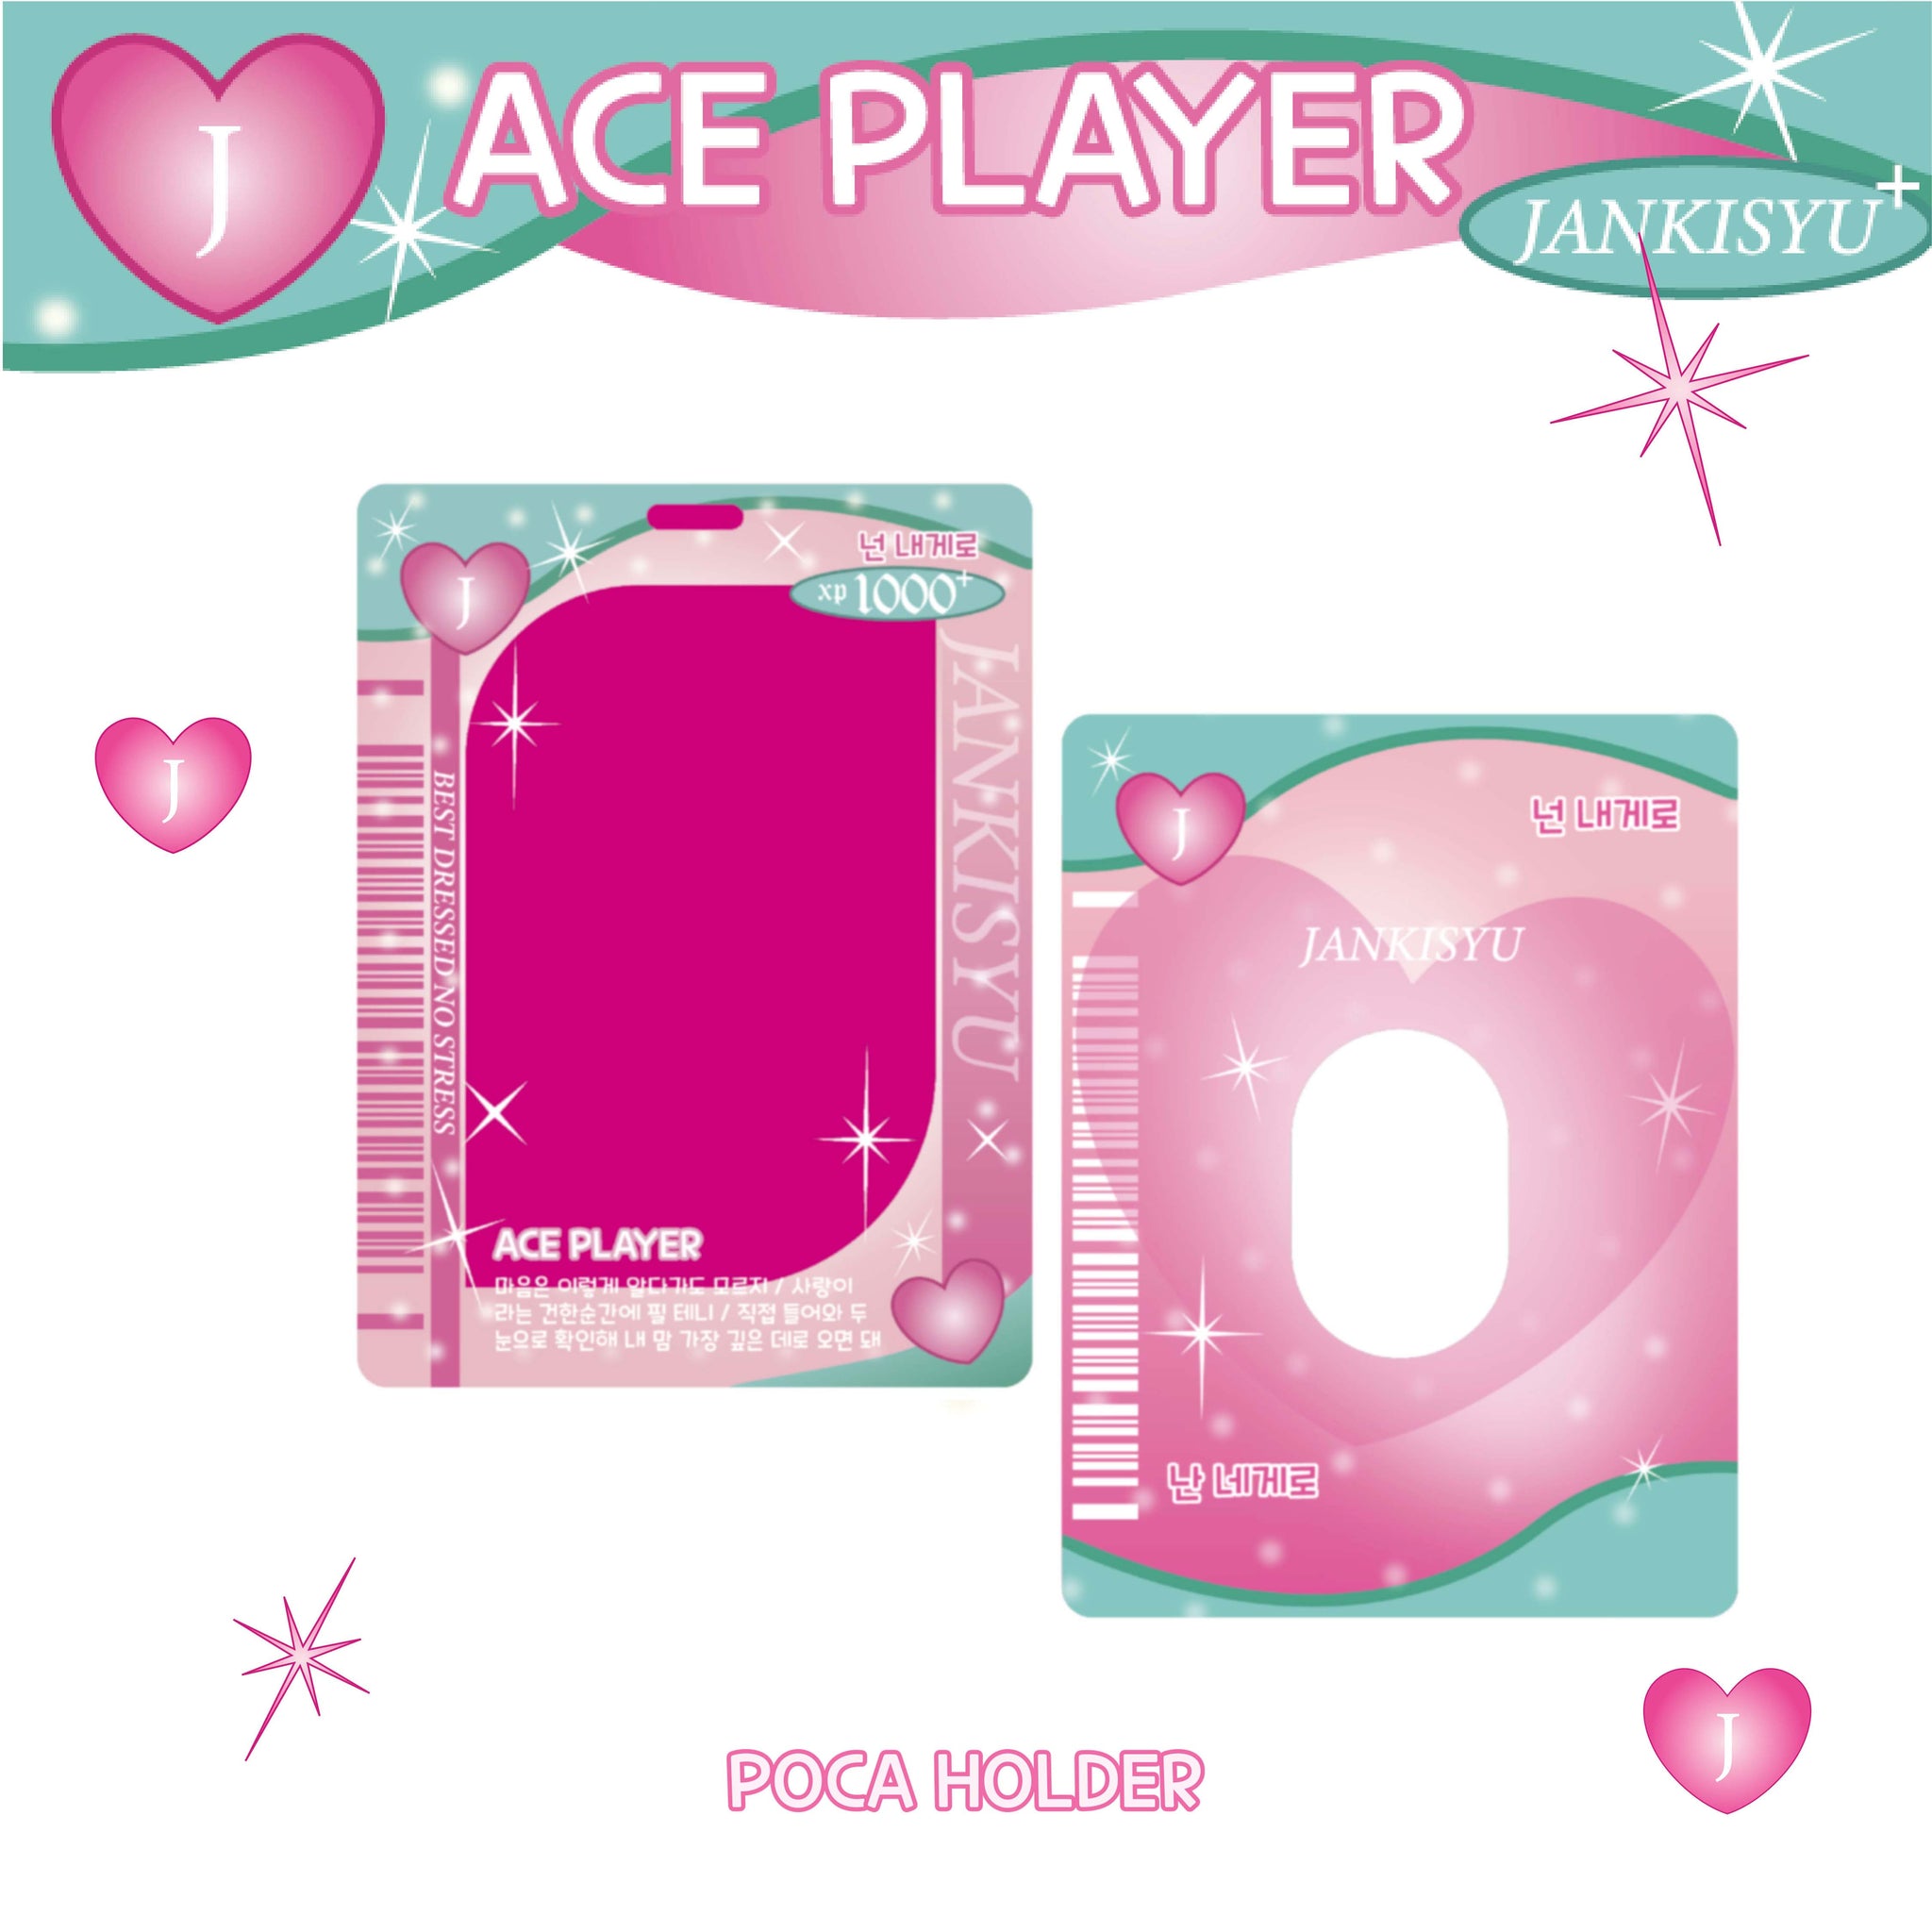 Ace Player Photocard Holder by JANKISYU